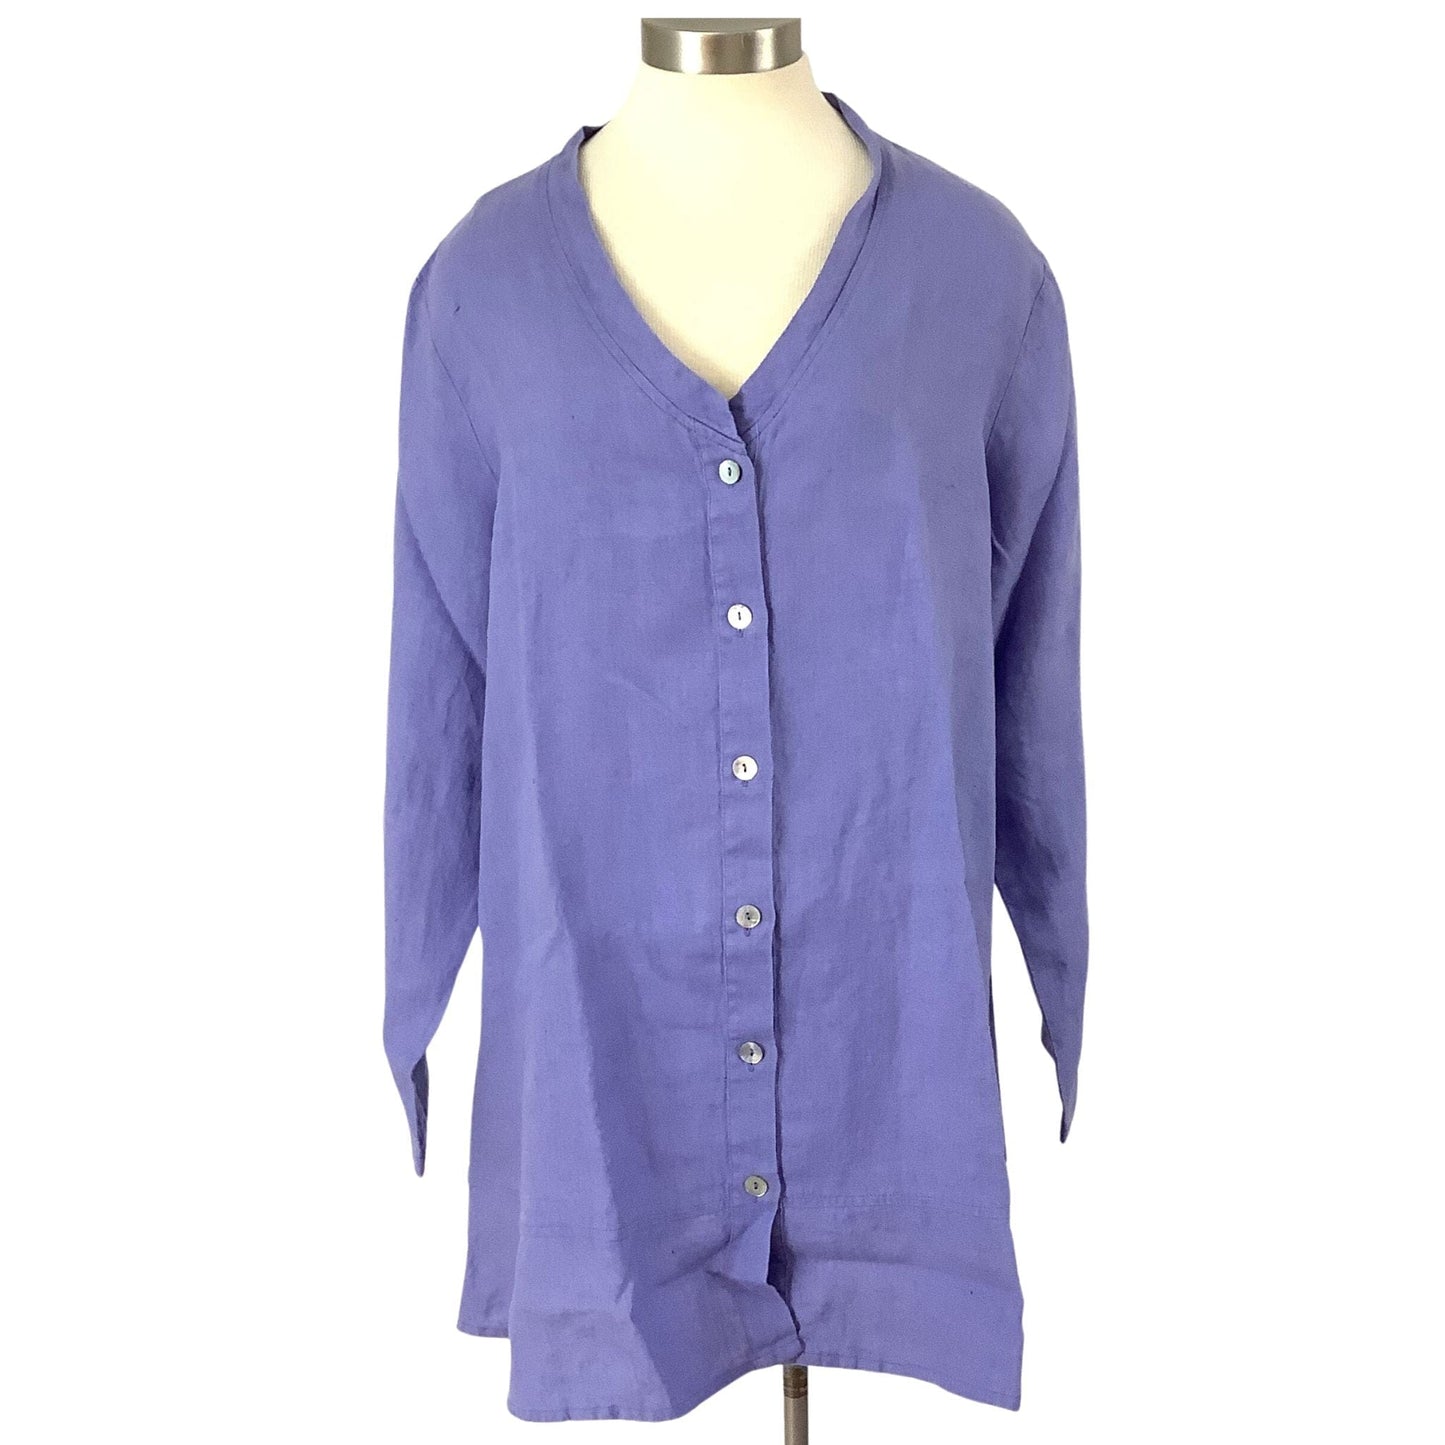 Vintage Flax Linen Tunic Large / Blue / Tunic